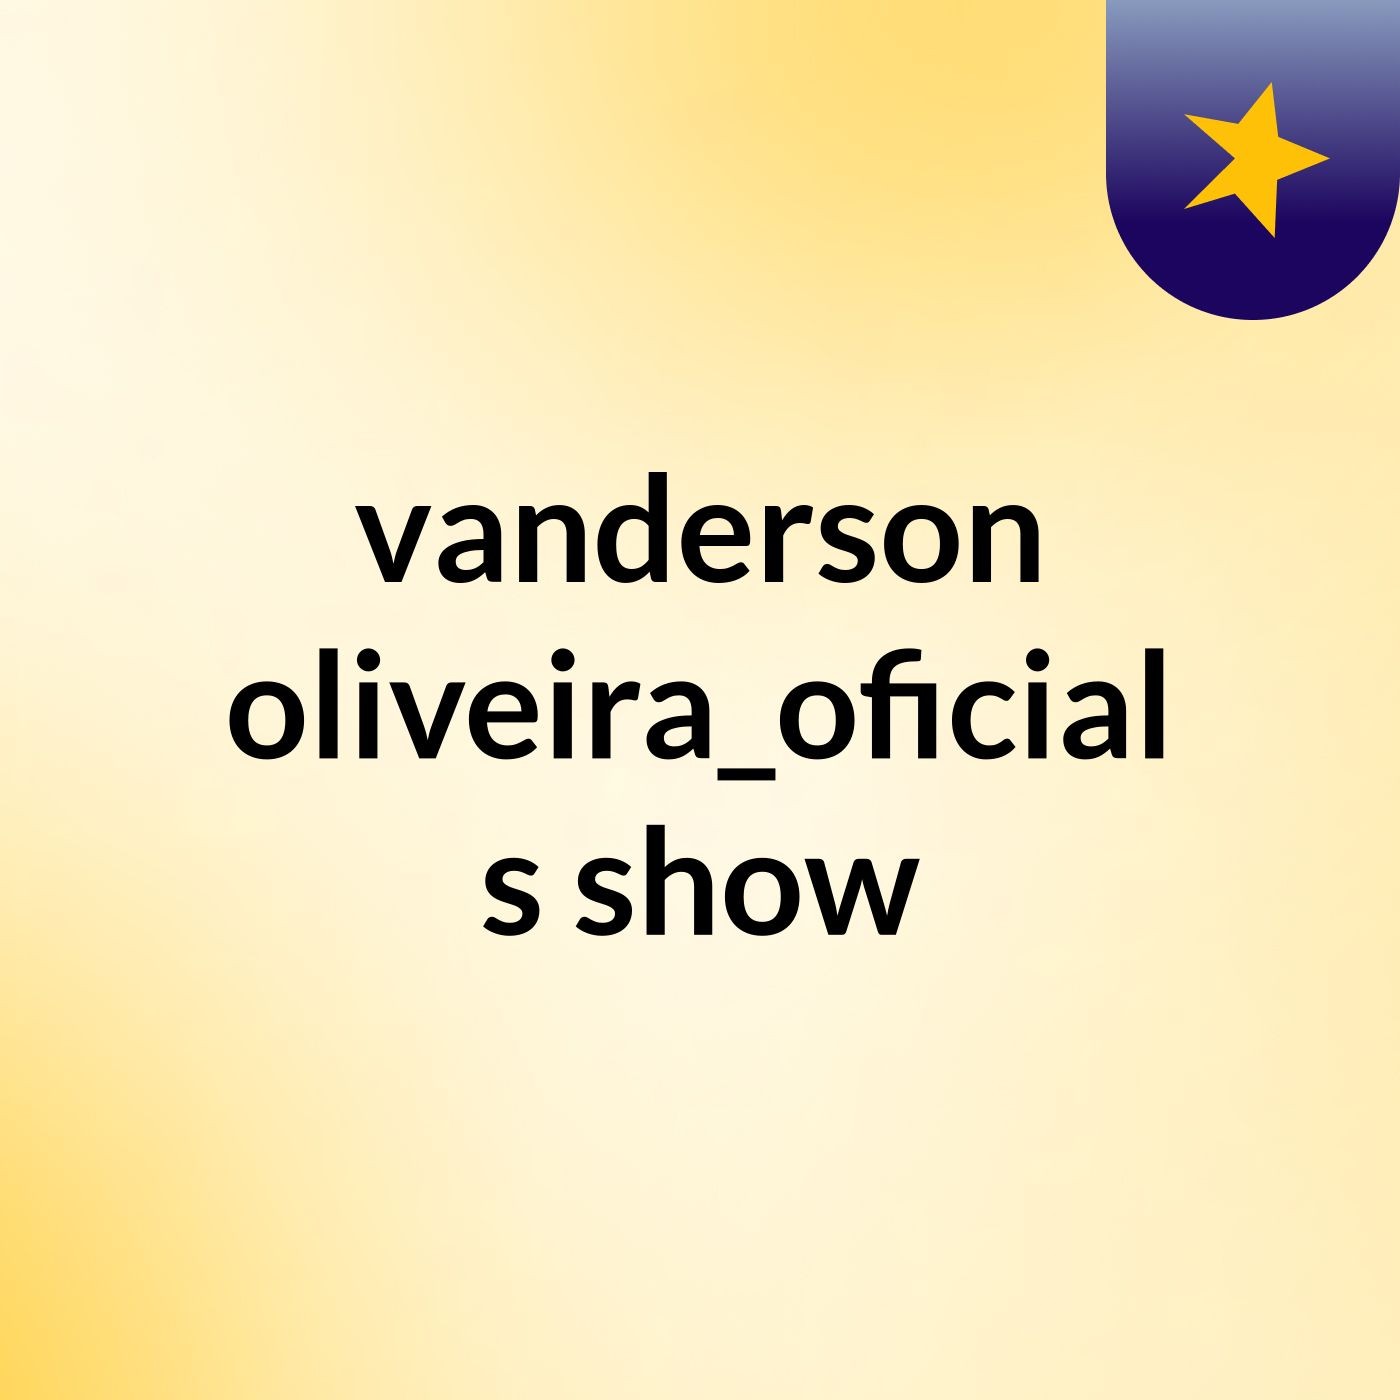 vanderson oliveira_oficial's show